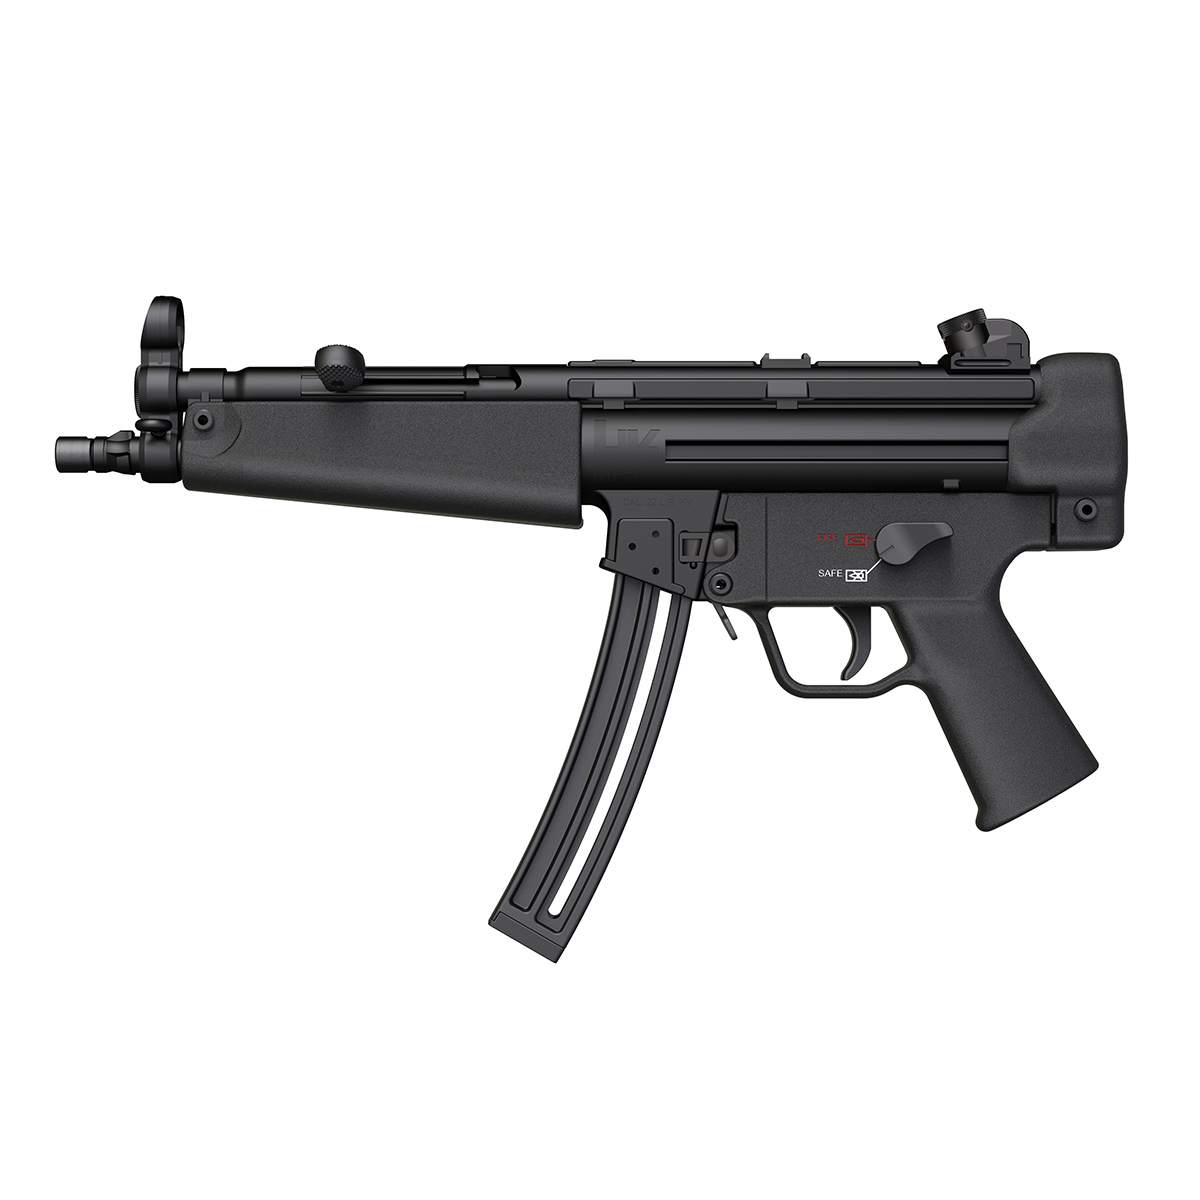 H&K MP5 PISTOL 22LR 25RD - Handguns